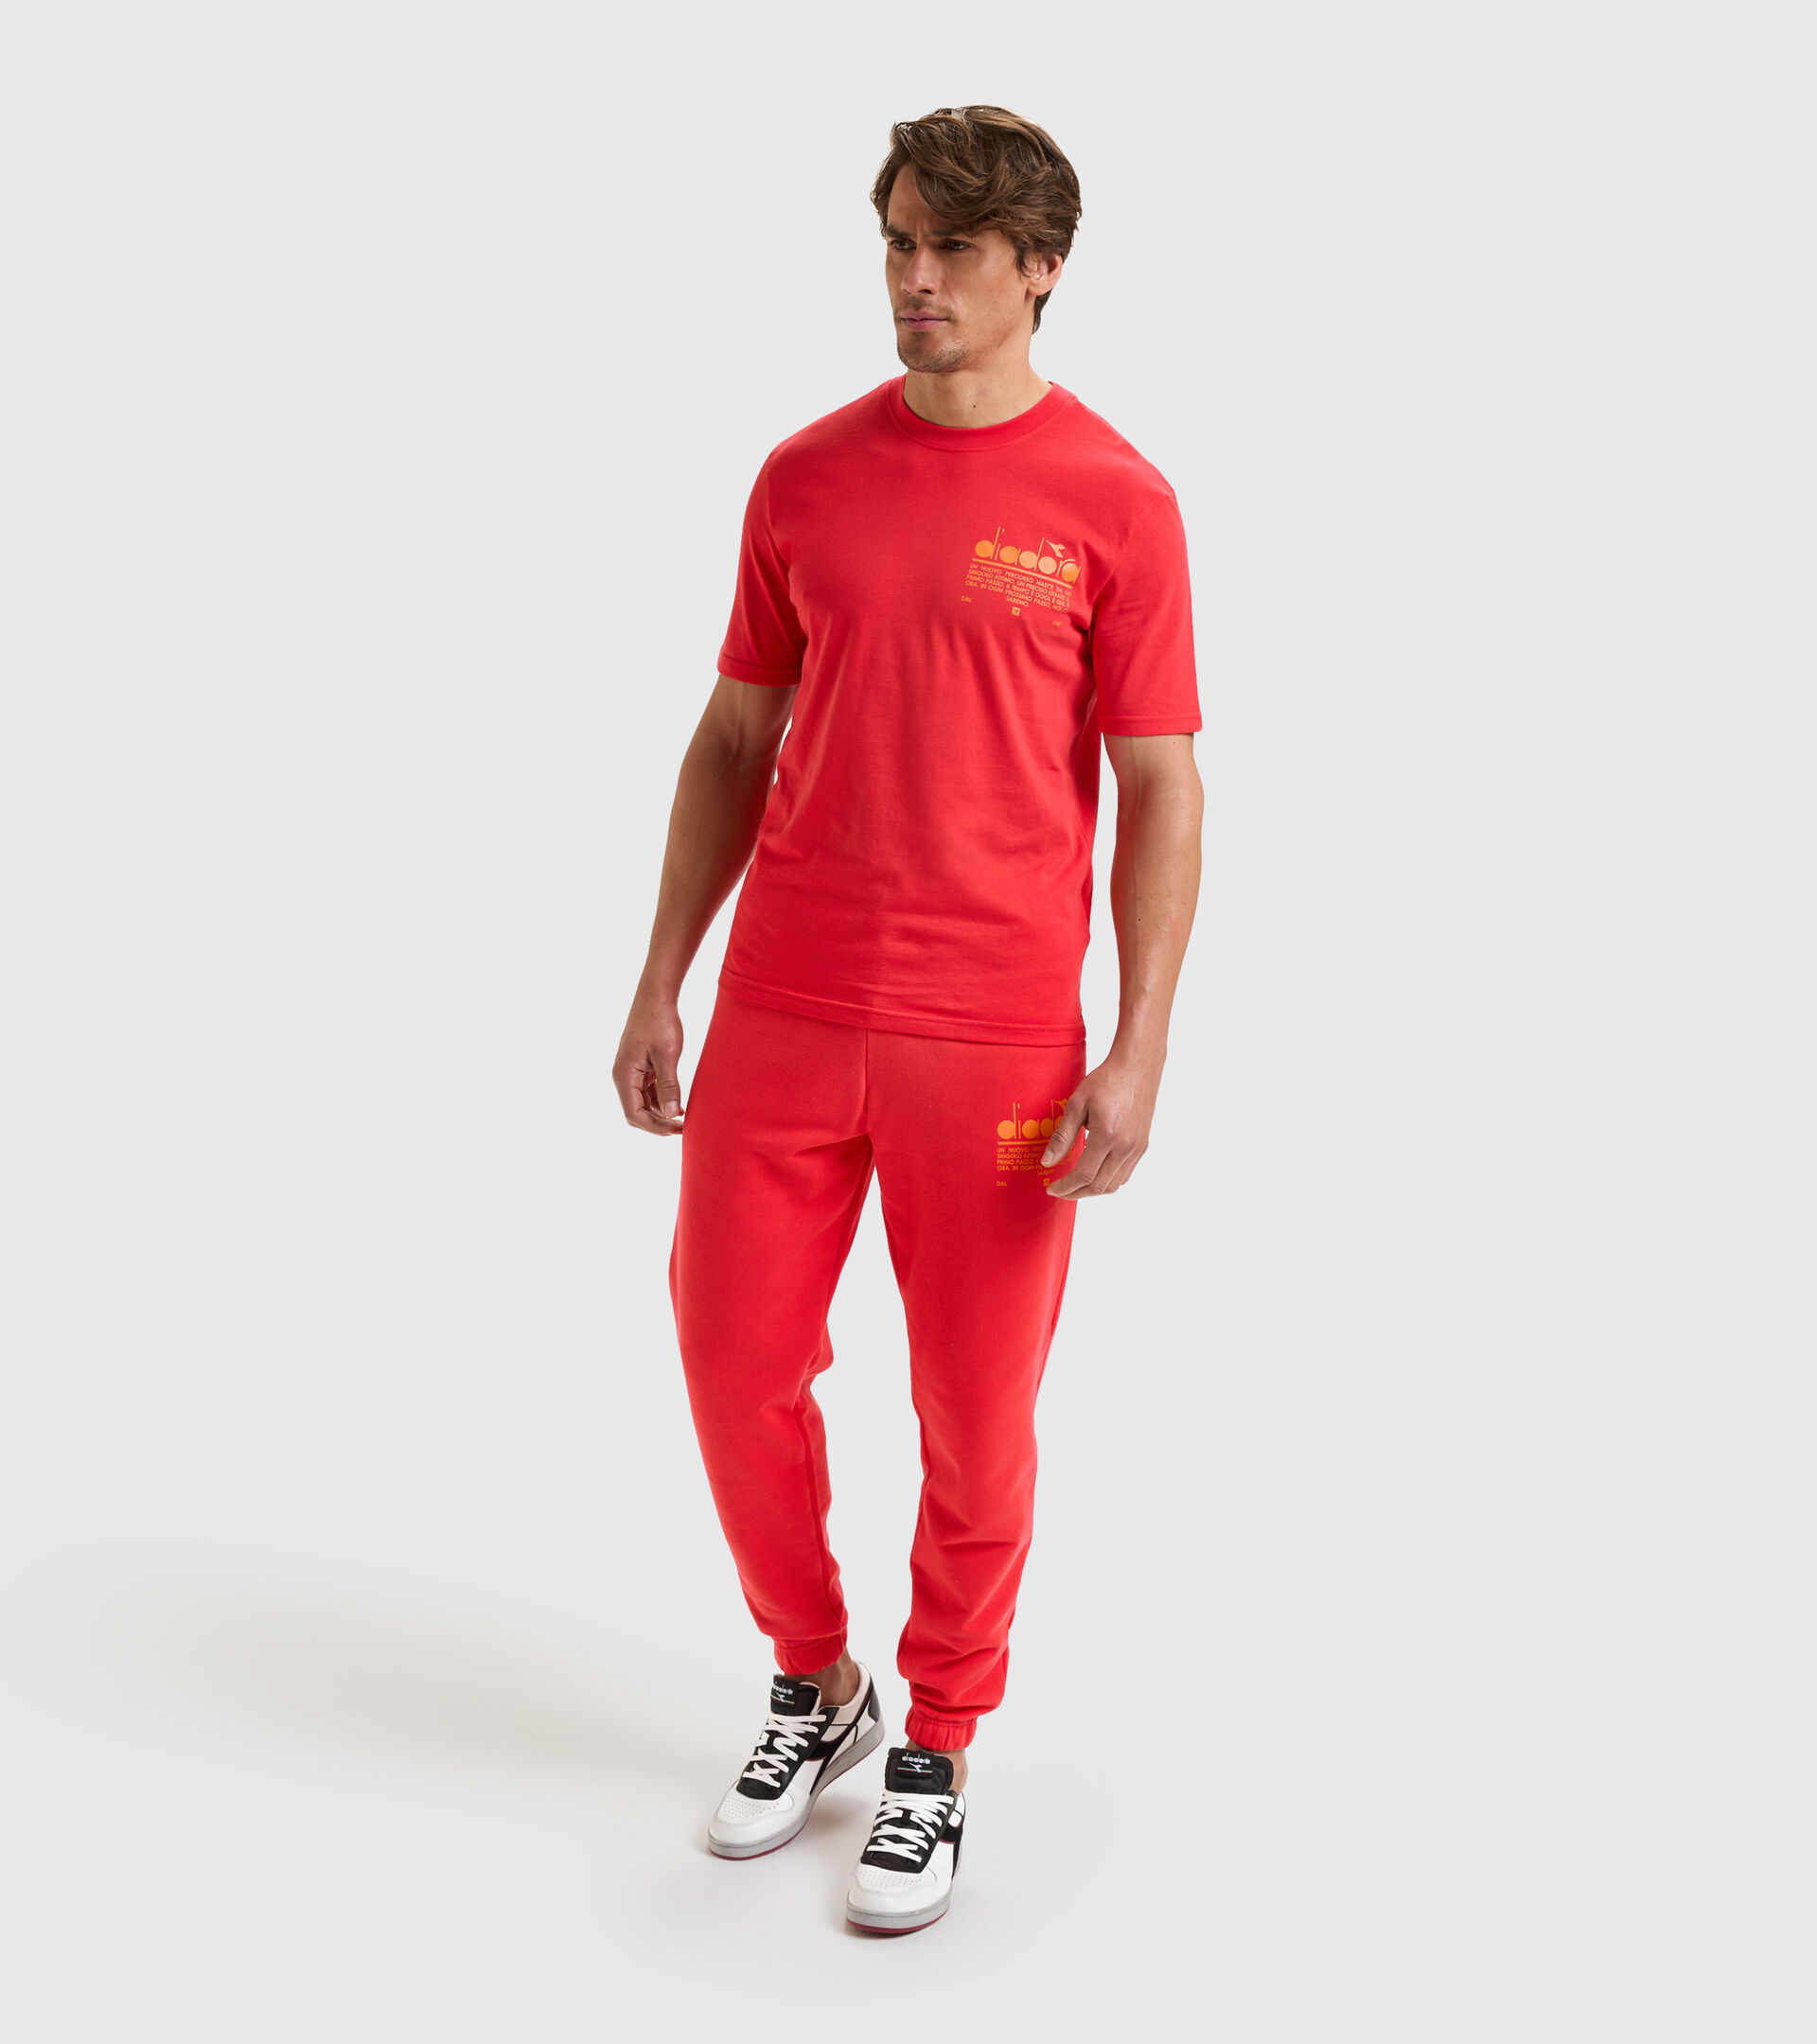 Cotton joggers - Unisex PANT MANIFESTO POPPY RED - Diadora